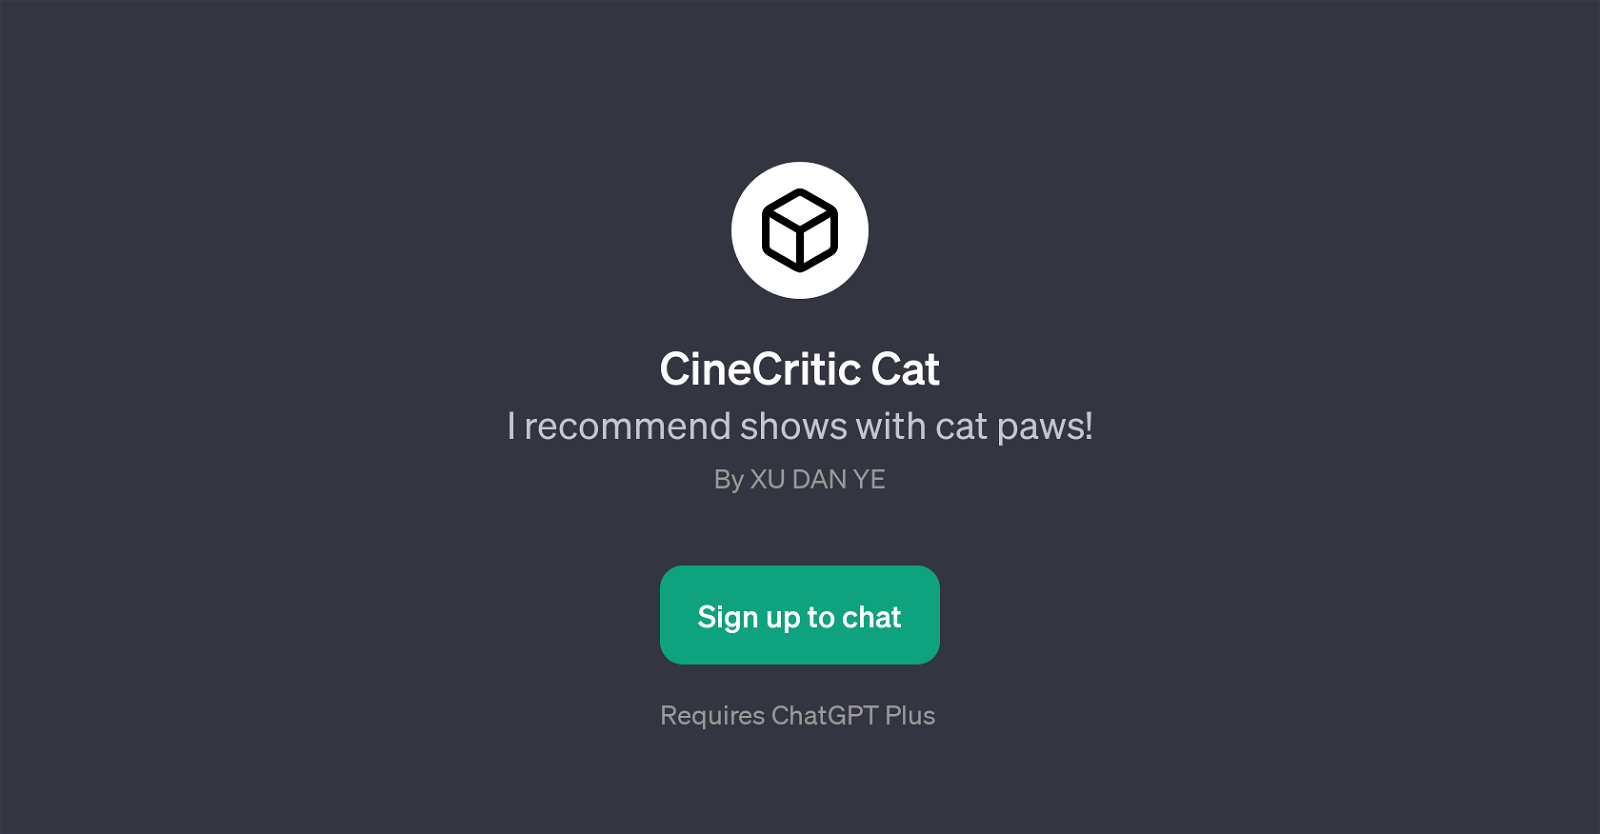 CineCritic Cat website